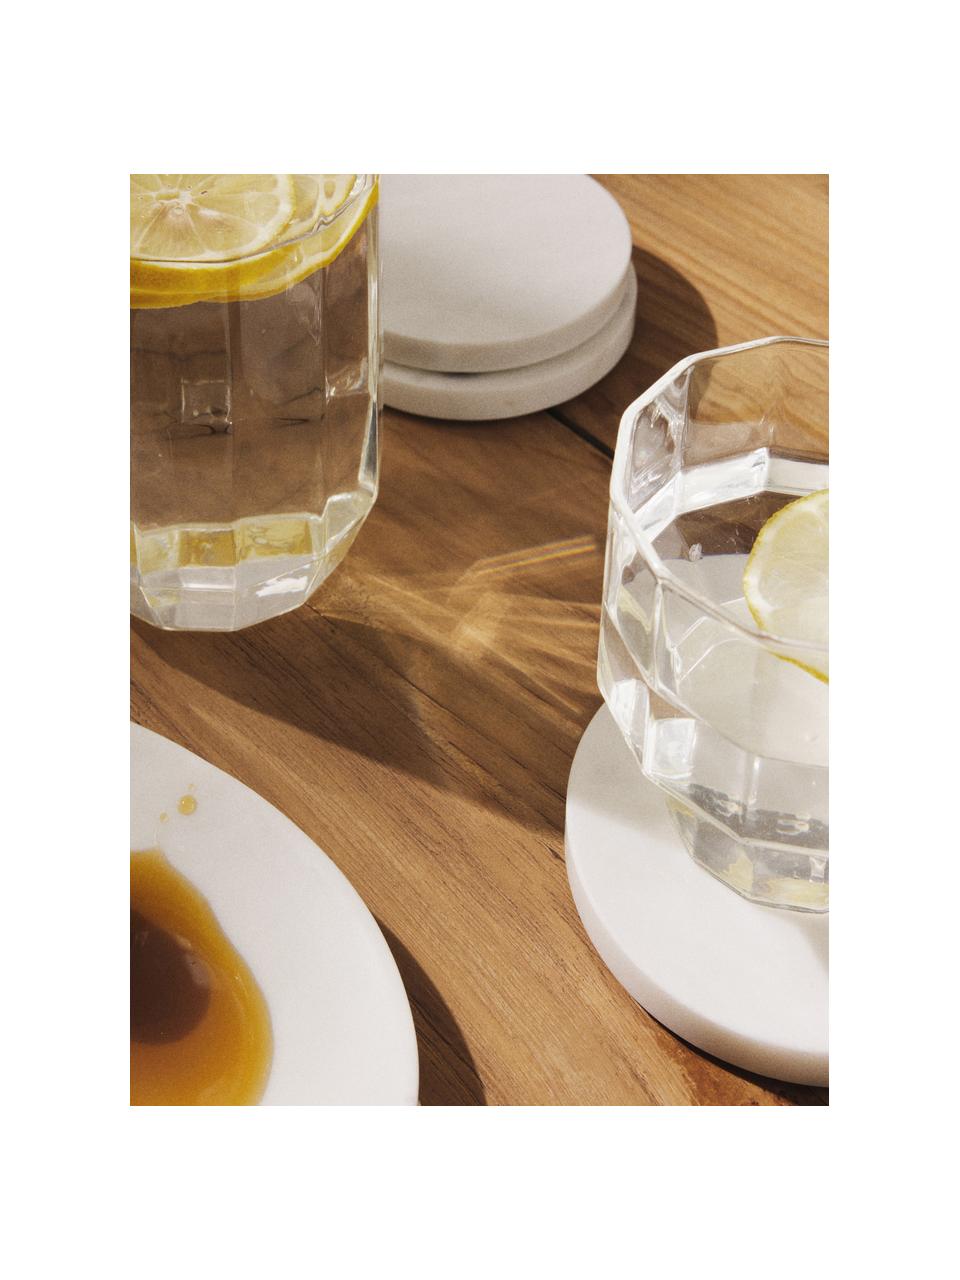 Bicchieri in vetro soffiato Angoli 4 pz, Vetro borosilicato, Trasparente, Ø 9 x Alt. 9 cm, 360 ml